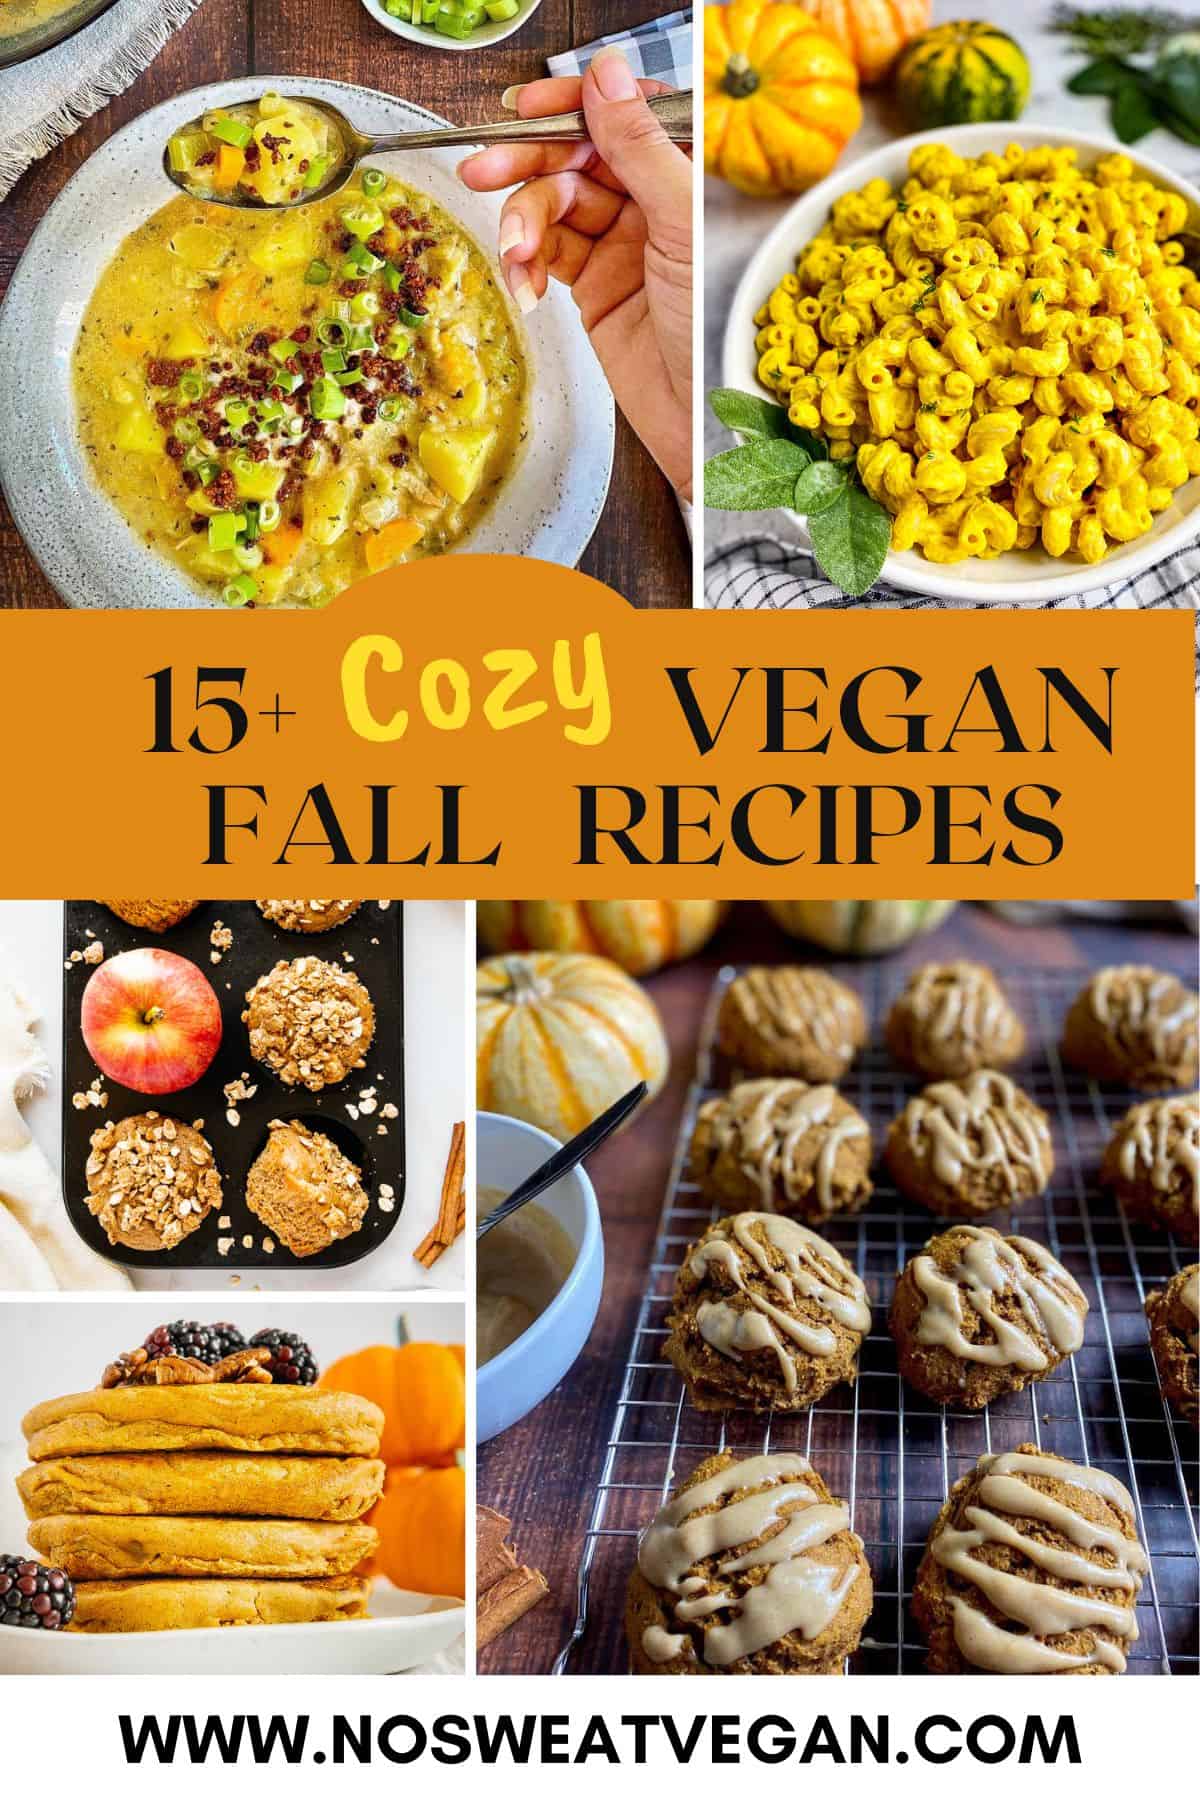 Fall vegan recipes collage.